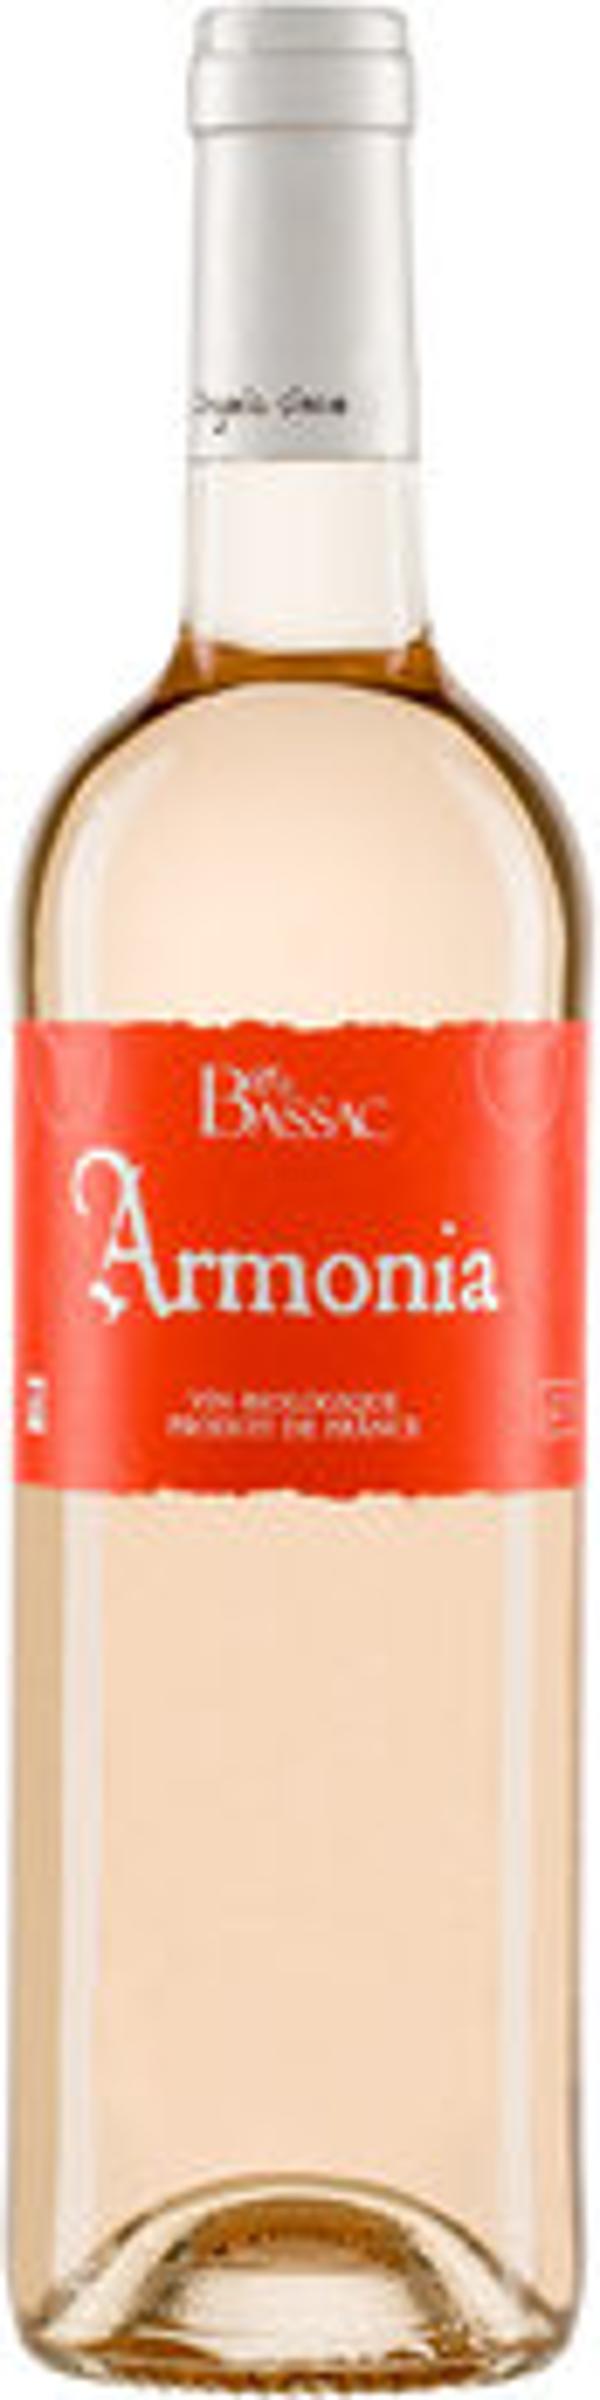 Produktfoto zu Armonia rosé